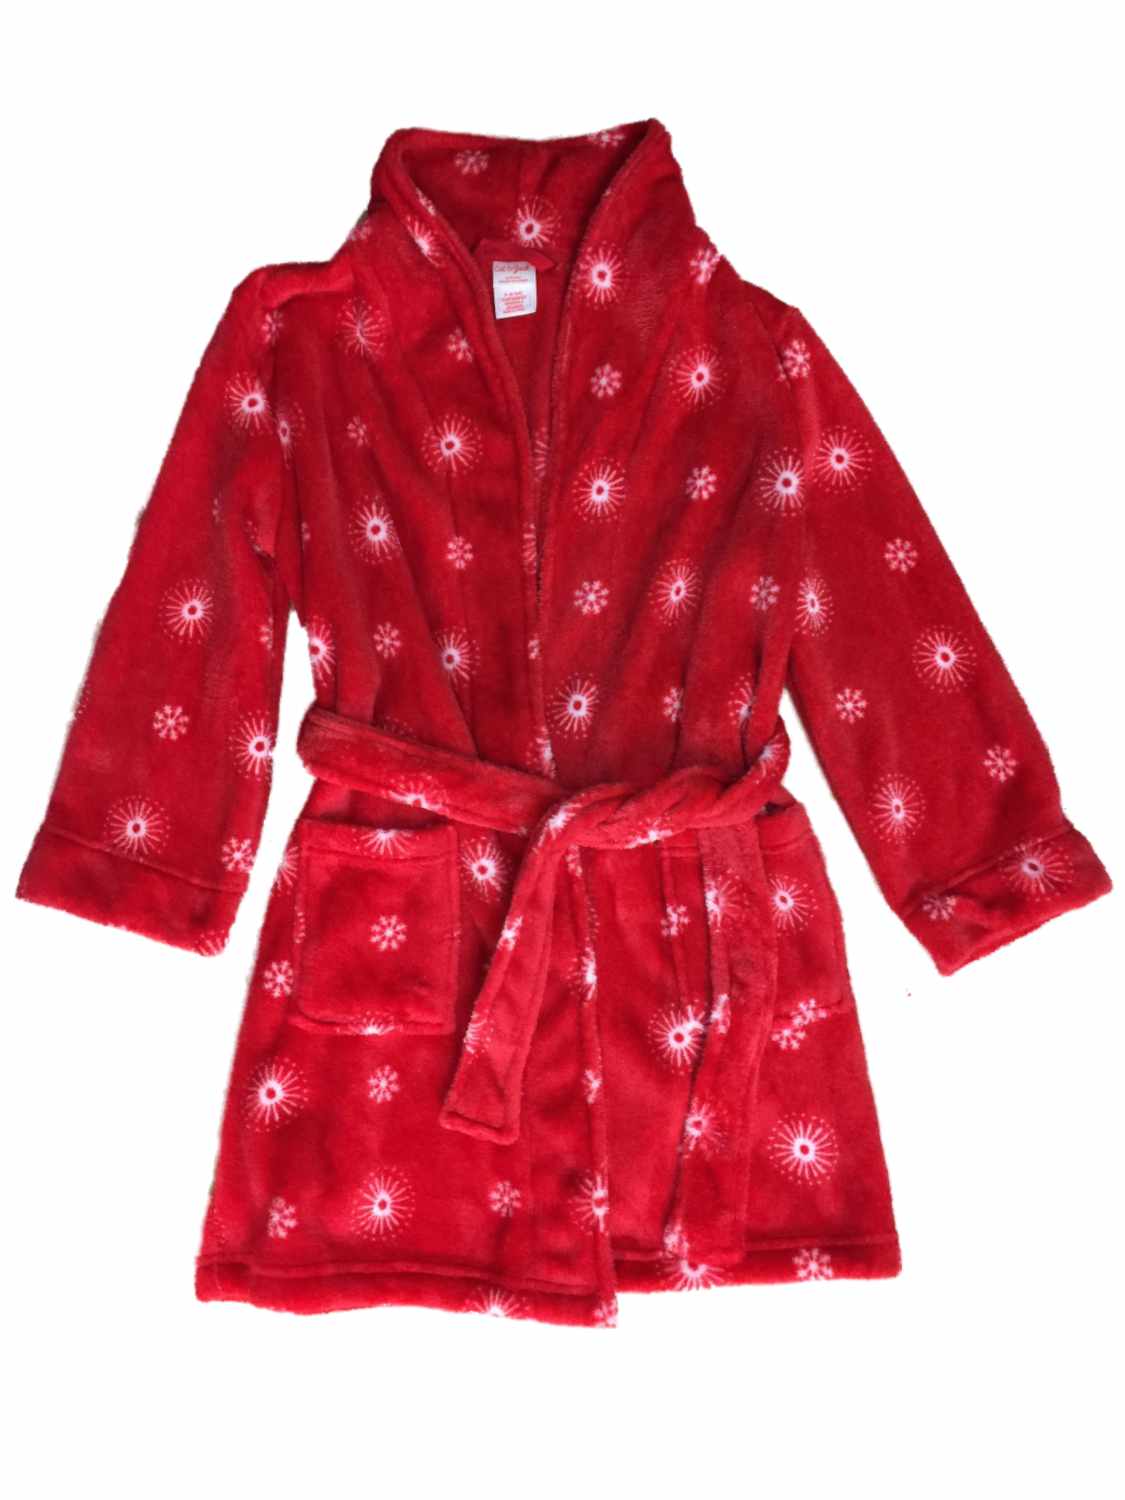 CatJack Girls Plush Red Fleece Sunburst Snowflake Bathrobe Bath Robe House Coat